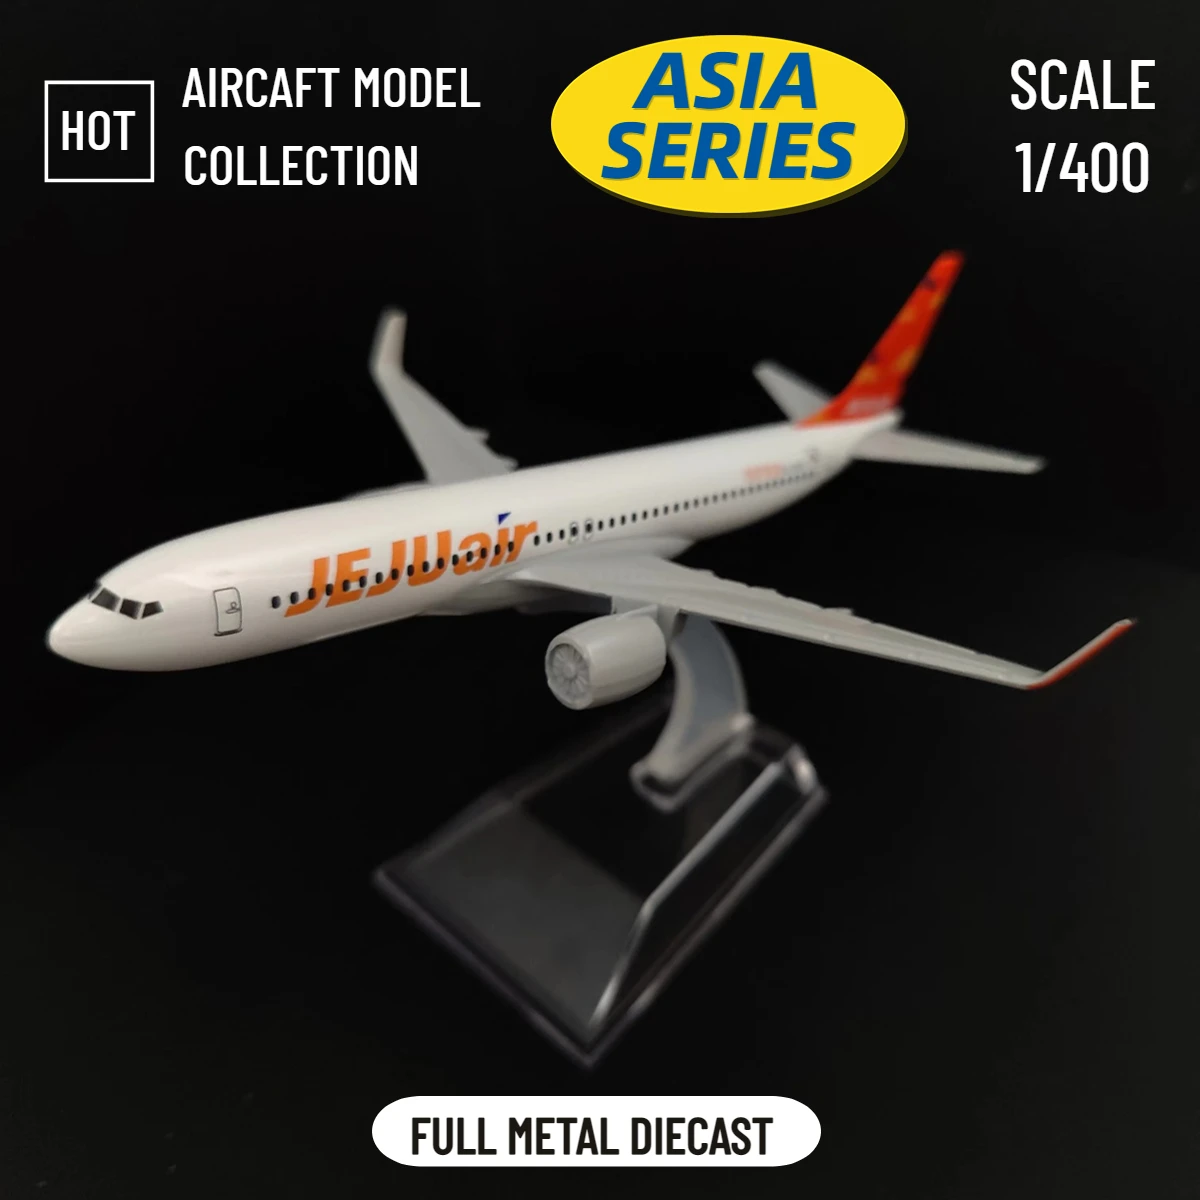 

Scale 1:400 Metal Aircraft Replica 15cm Air Korea Jeju Asia Airlines Boeing Airplane Diecast Model Aviation Miniature for Boys